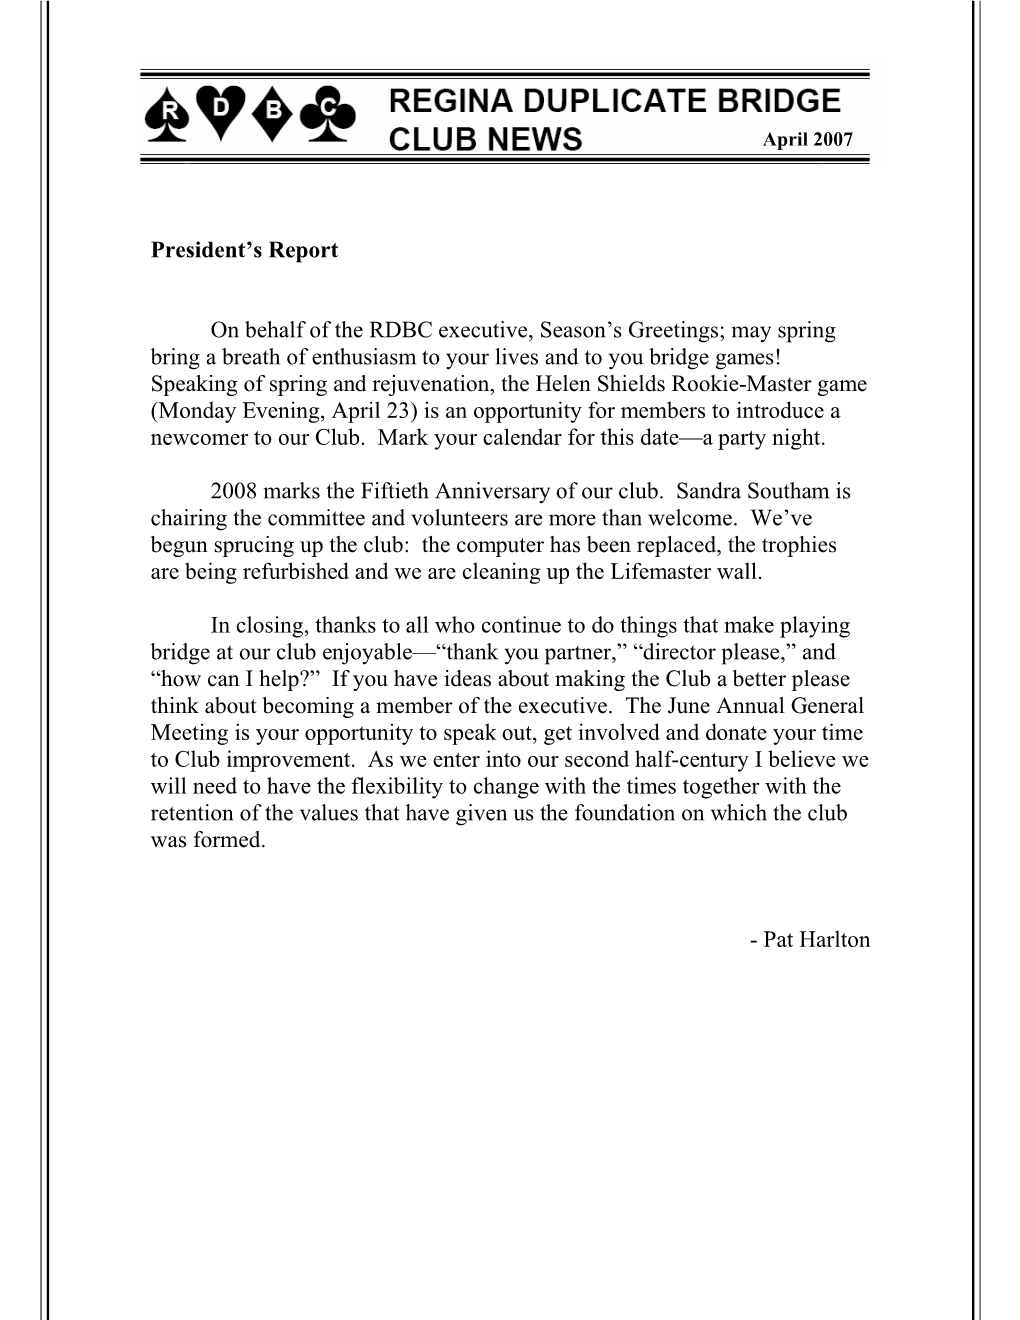 President's Report on Behalf of the RDBC Executive, Season's